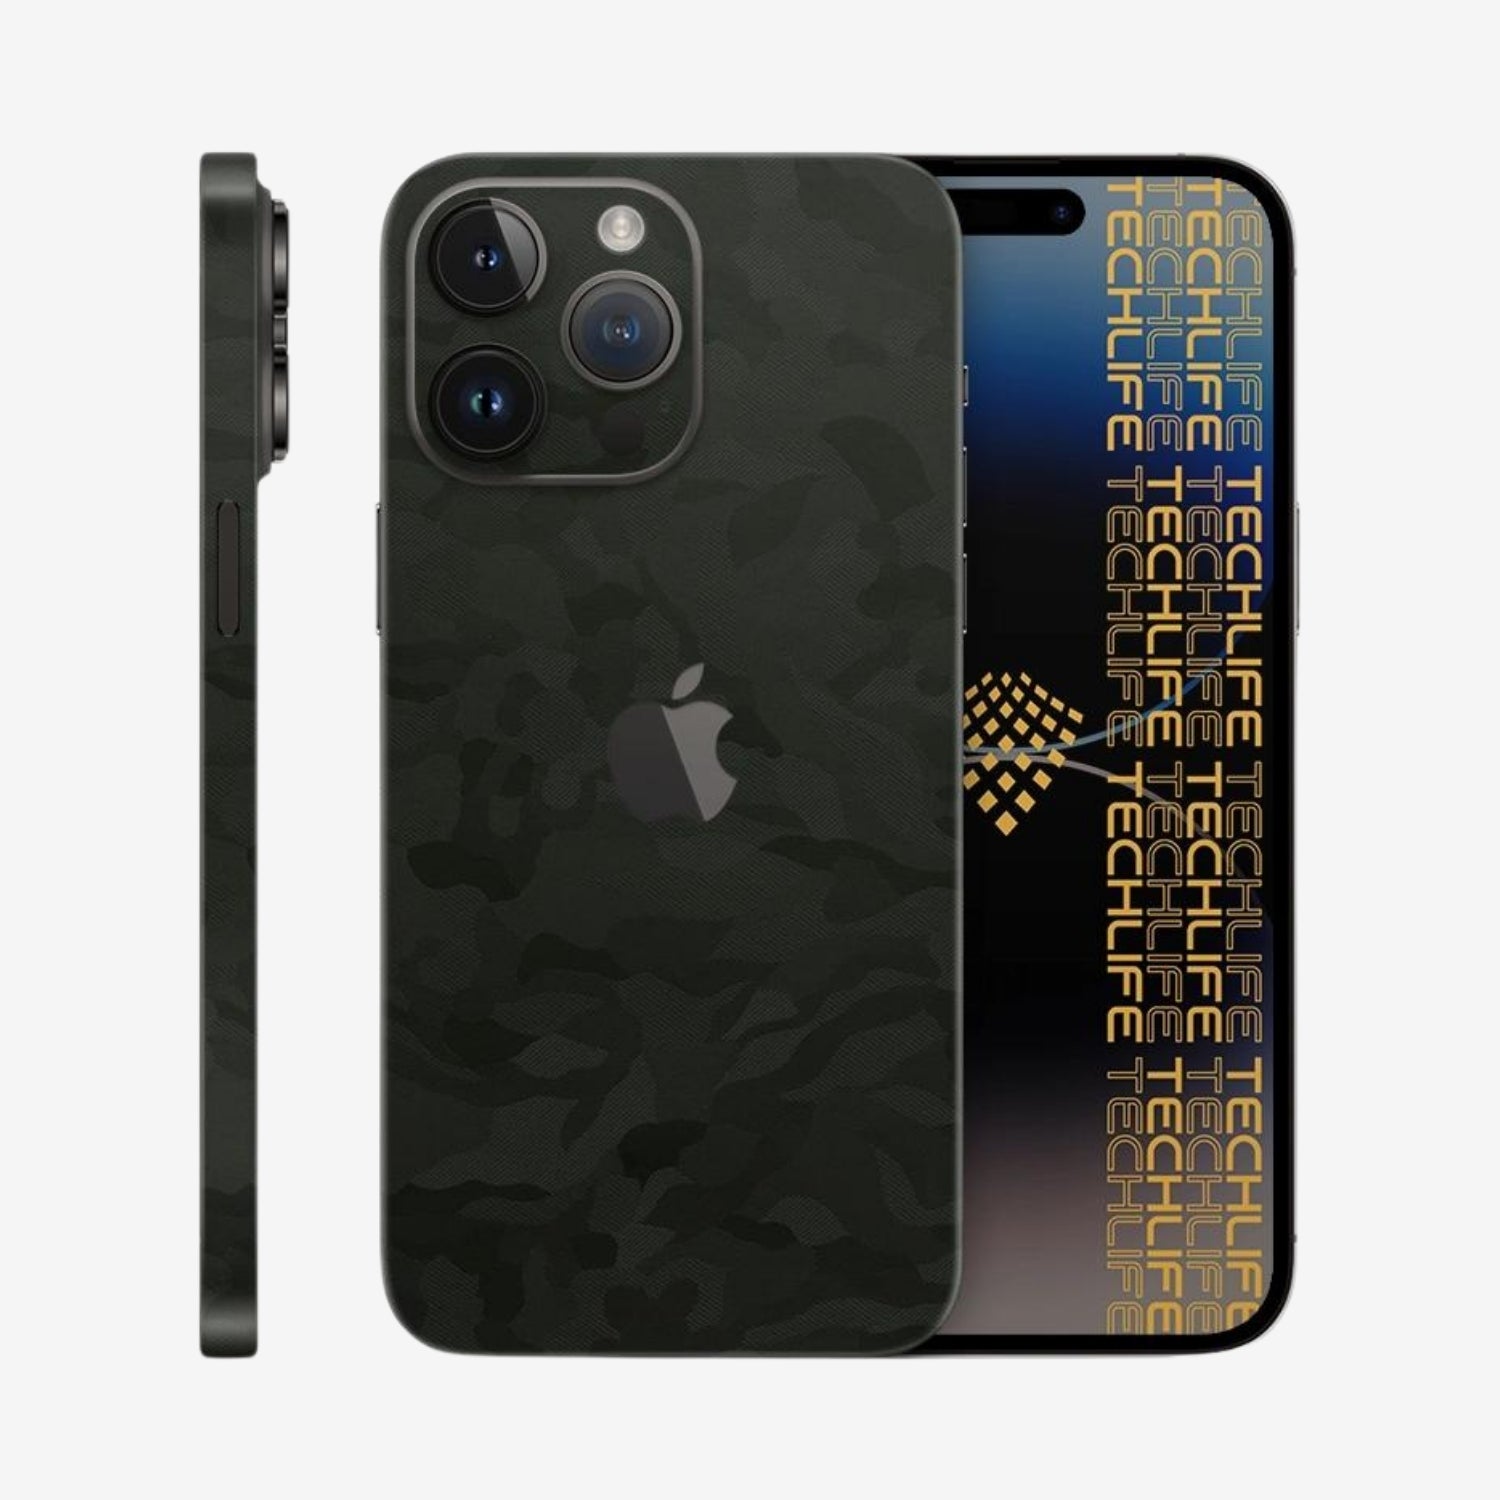 Skin Premium Camuflaje Comando Oscuro iPhone 12 Pro Max